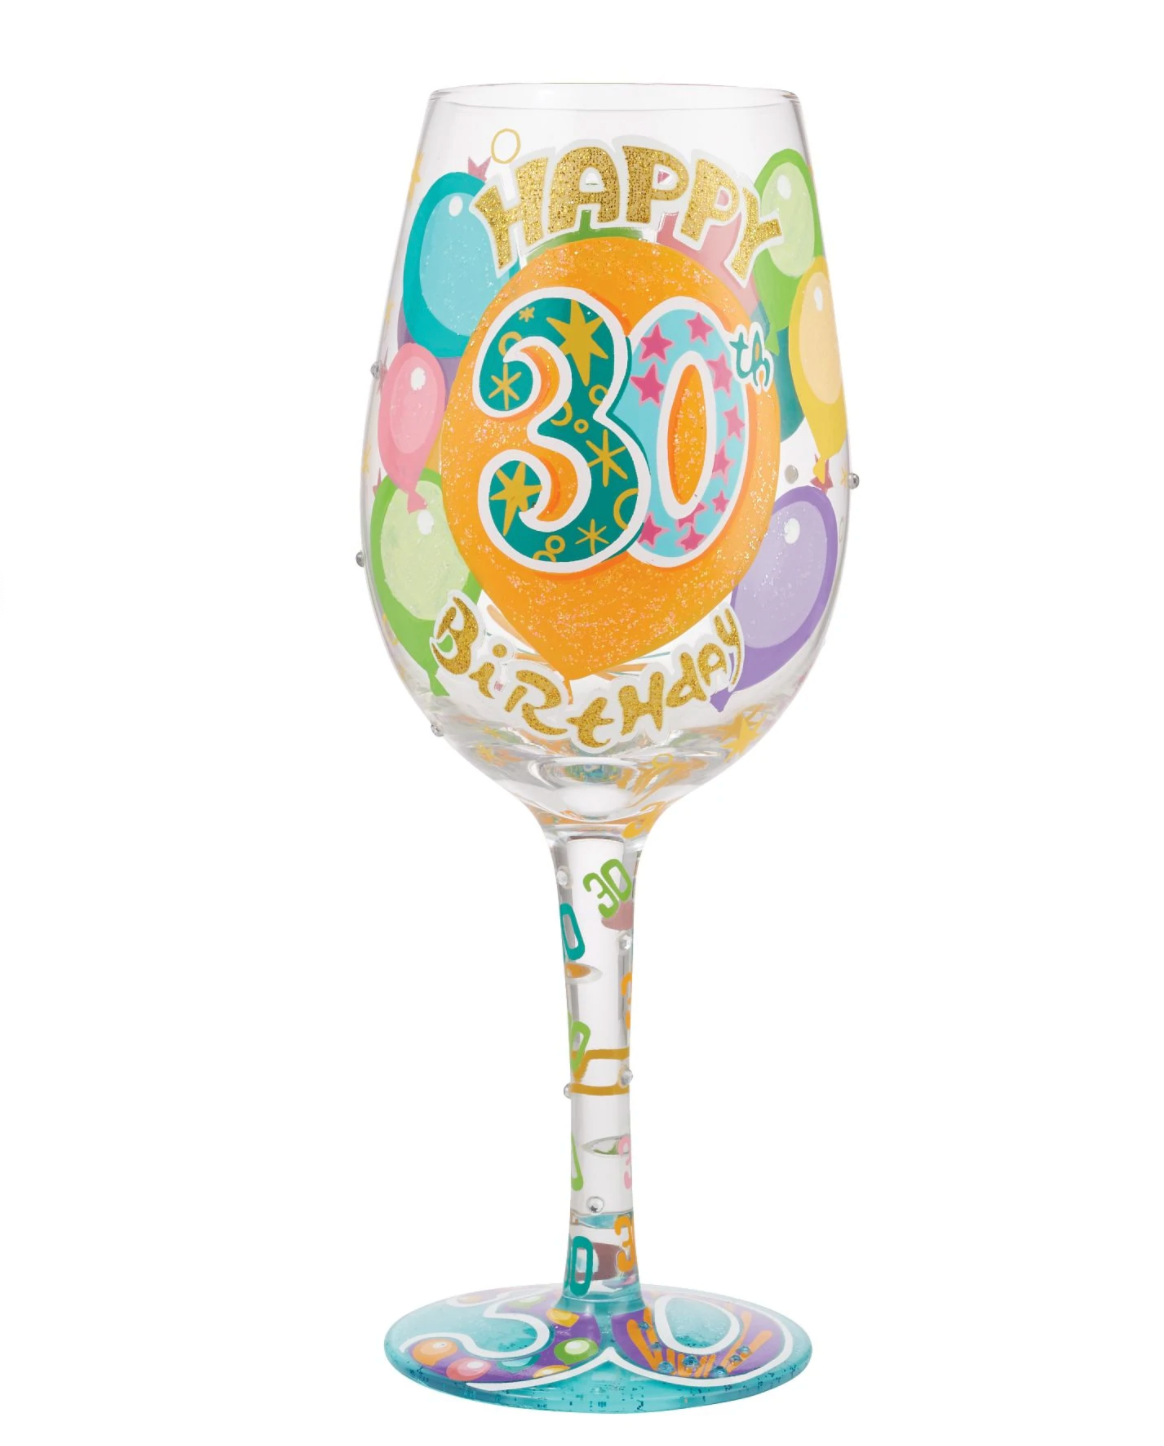 LOLITA BIRTHDAY WINE GLASSES